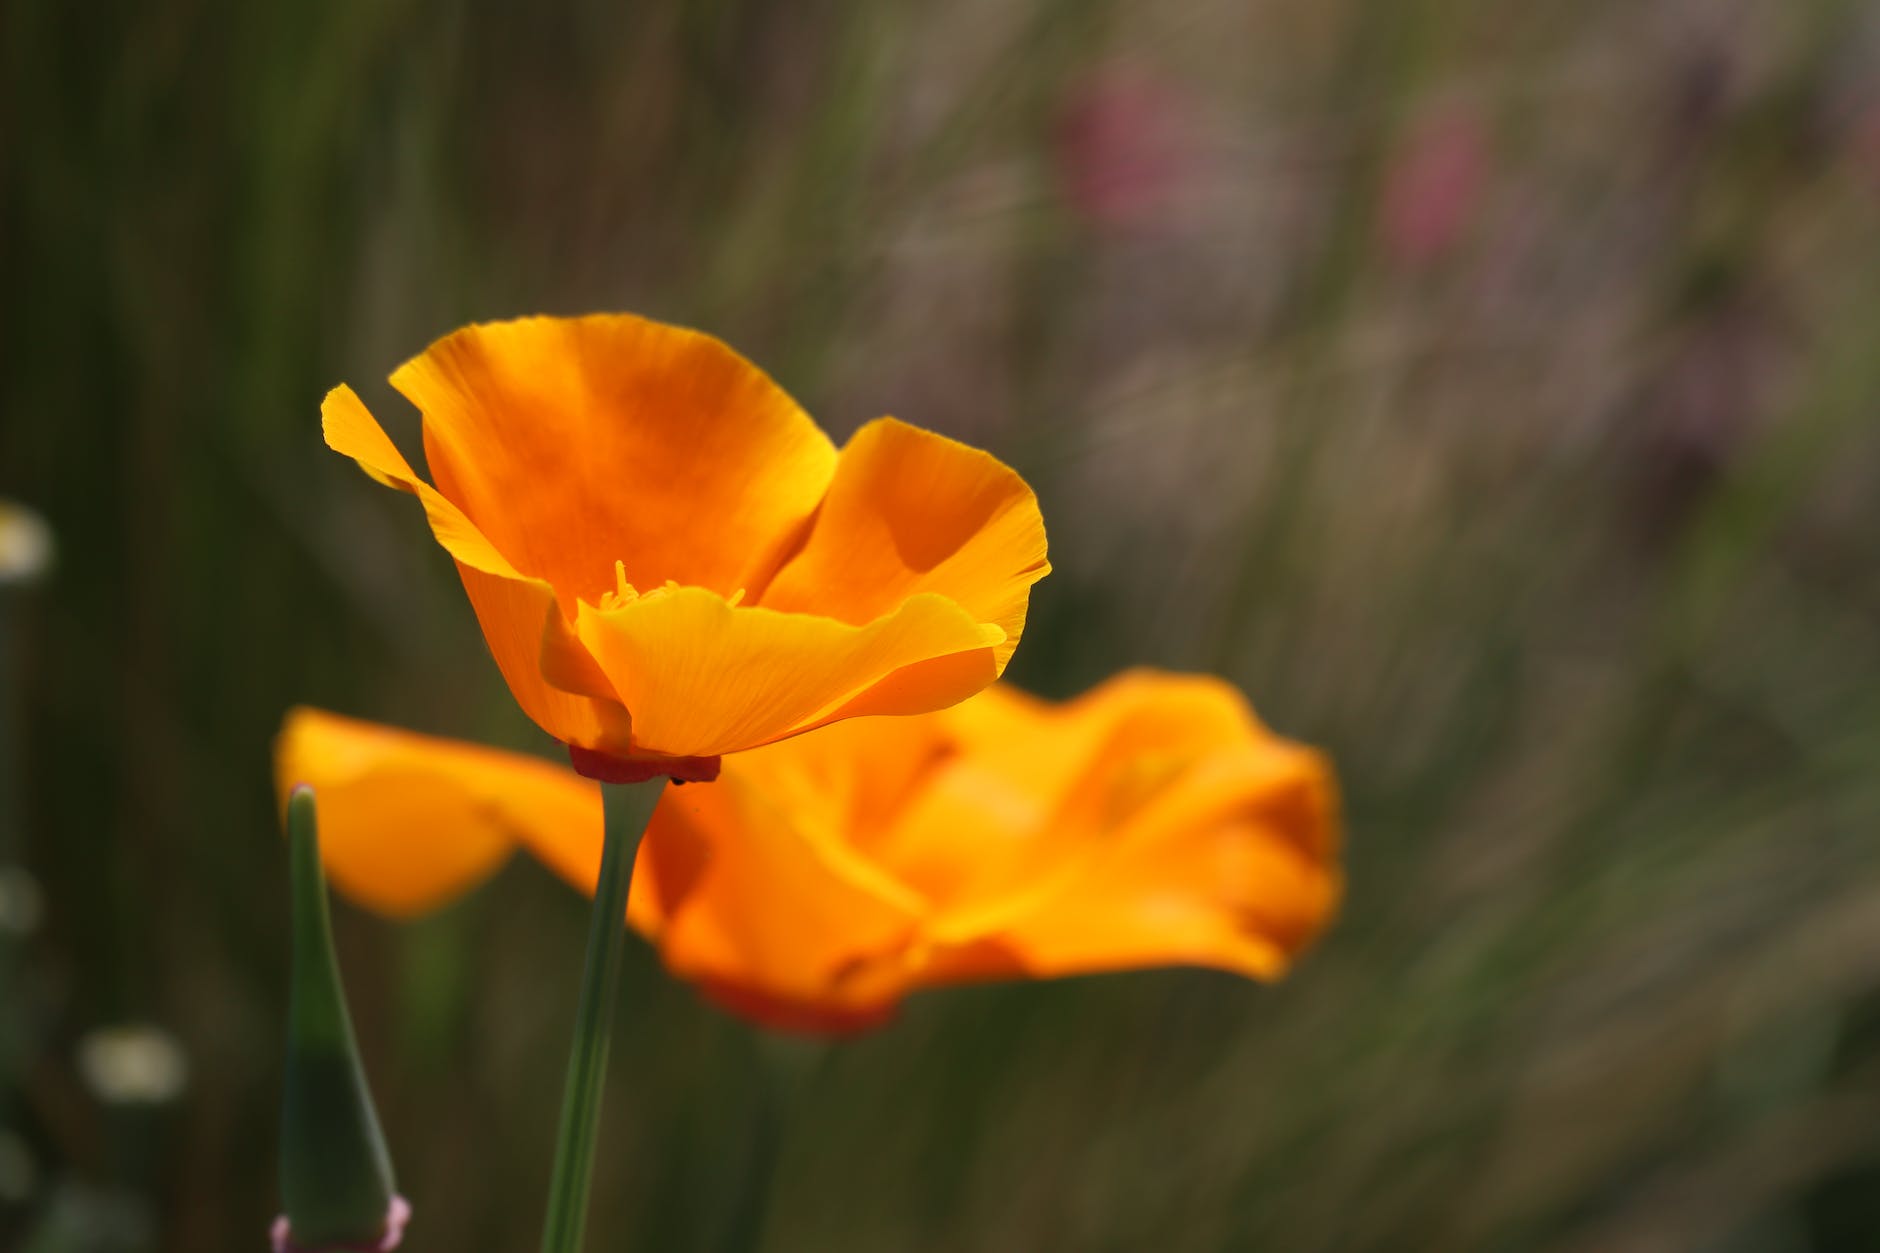 close up photograph of a california poppy flower